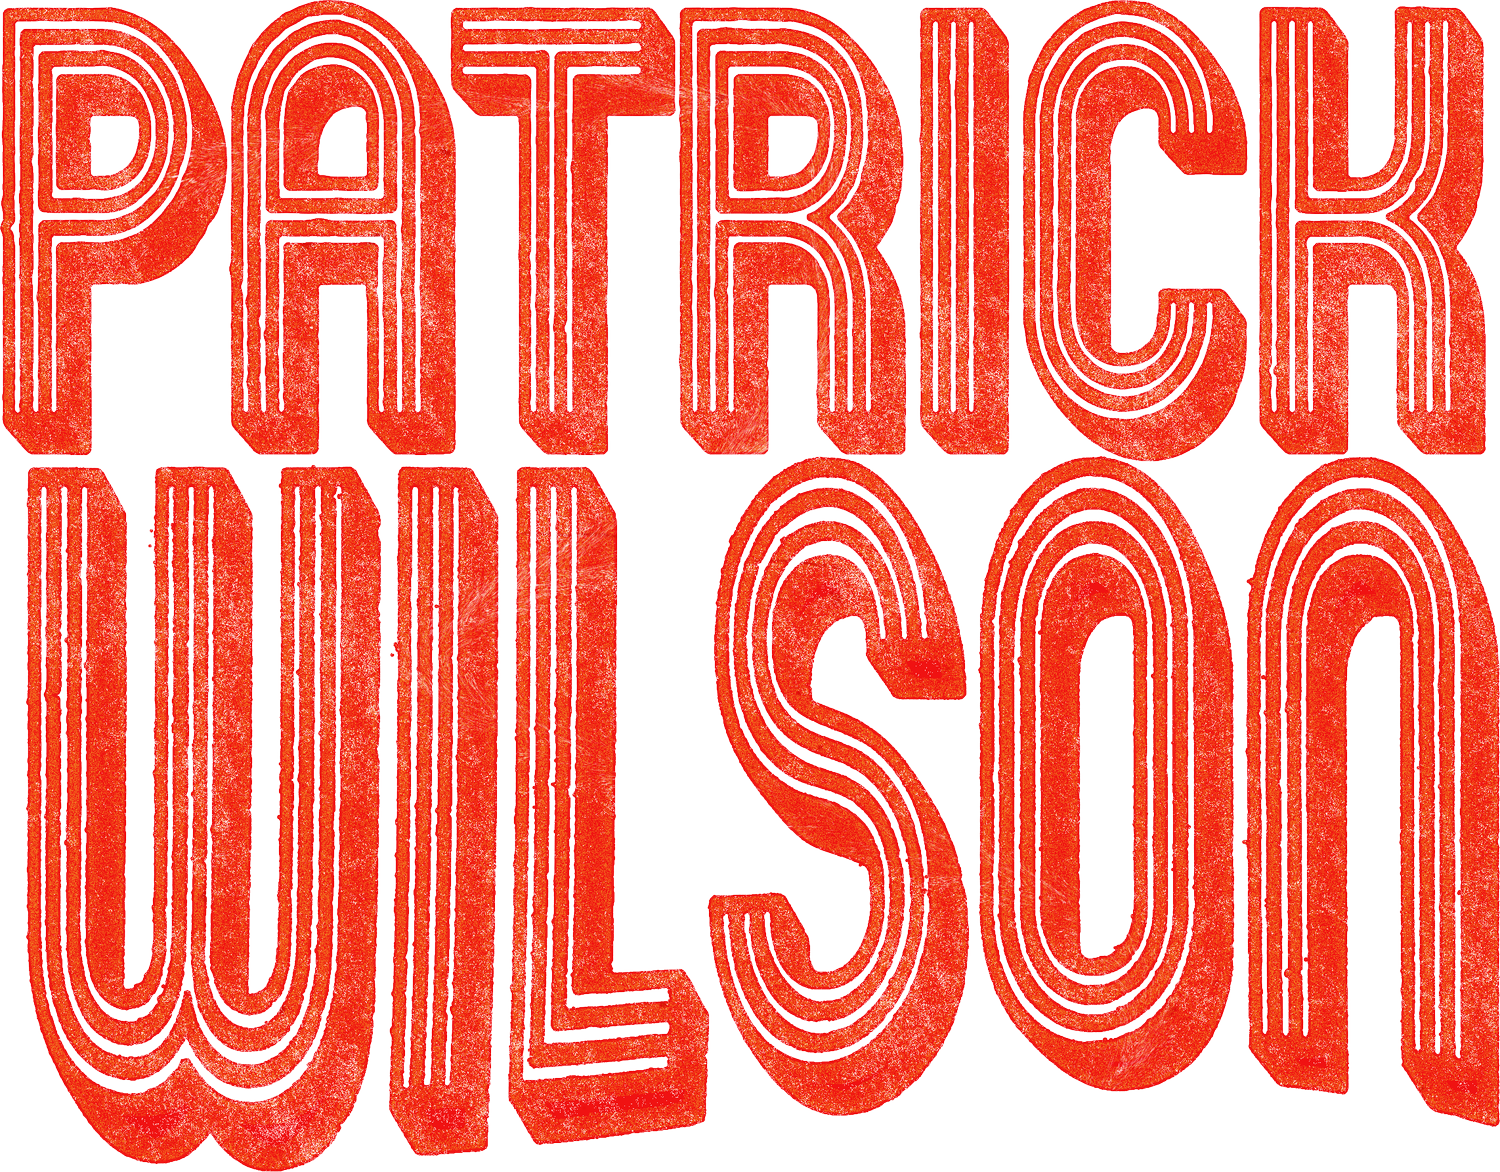 Patrick Wilson 